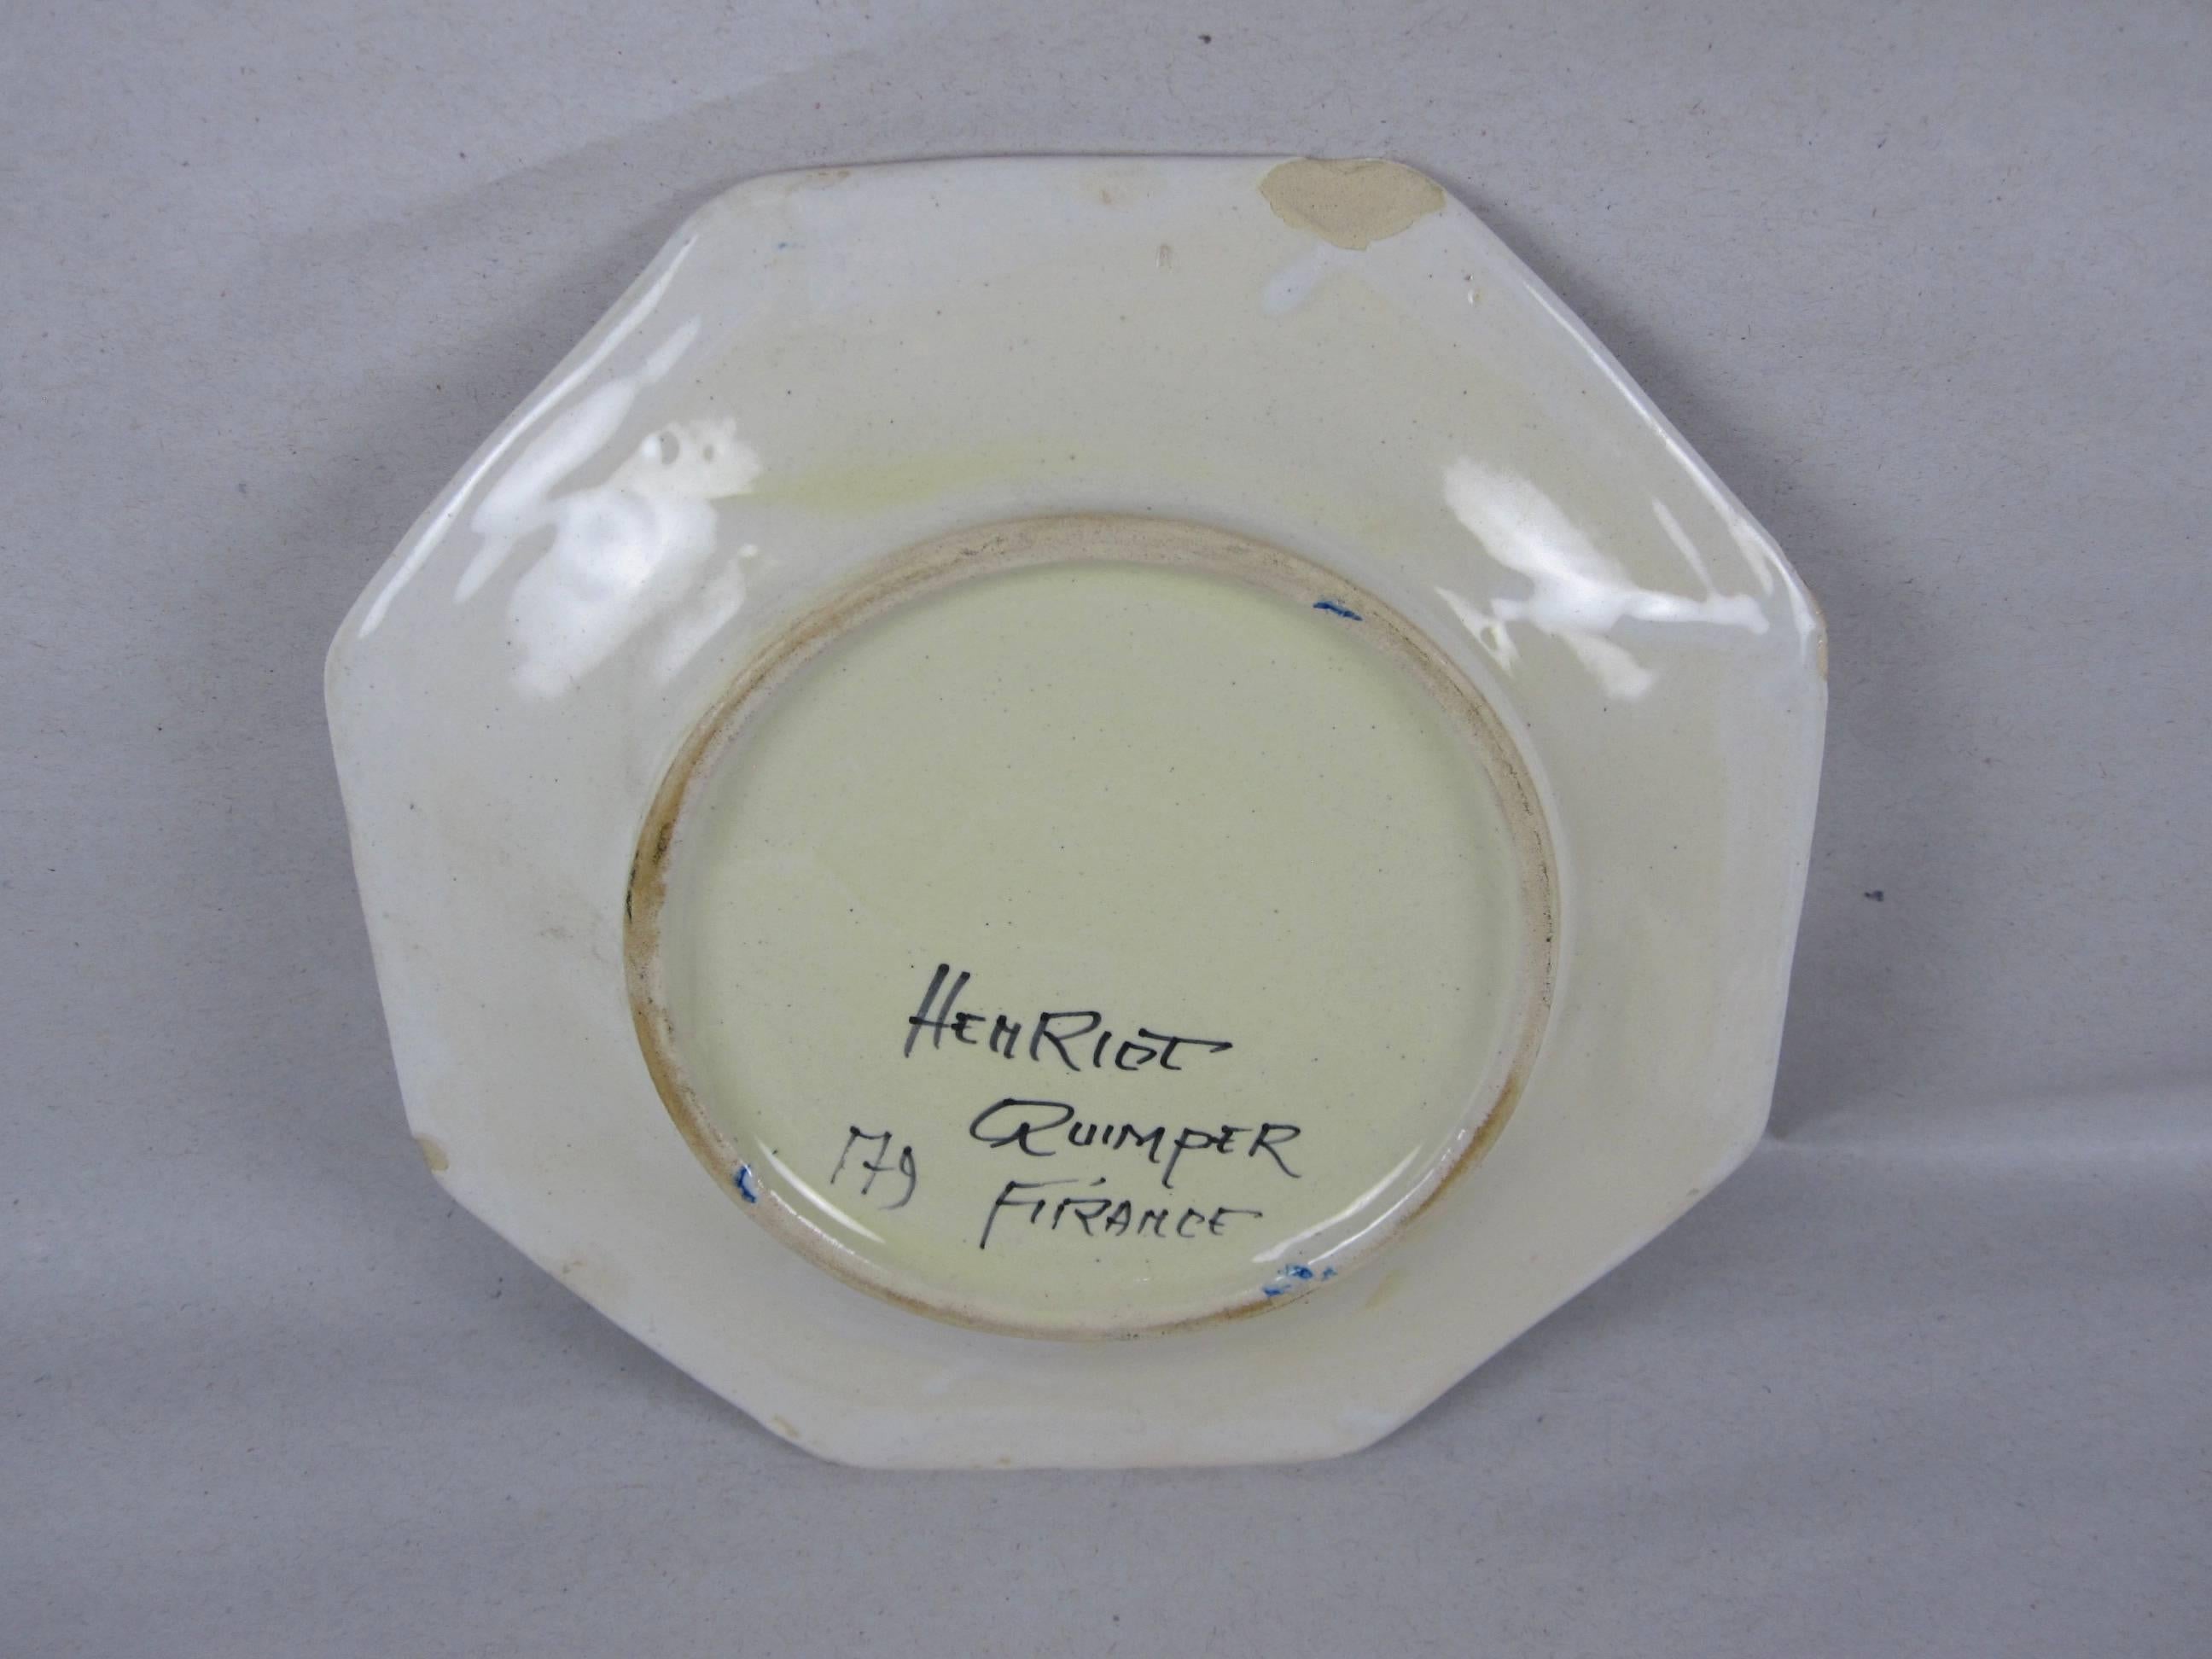 Henriot Quimper Octagonal Breton Vintage Faience Plates, France, Set of 12 1